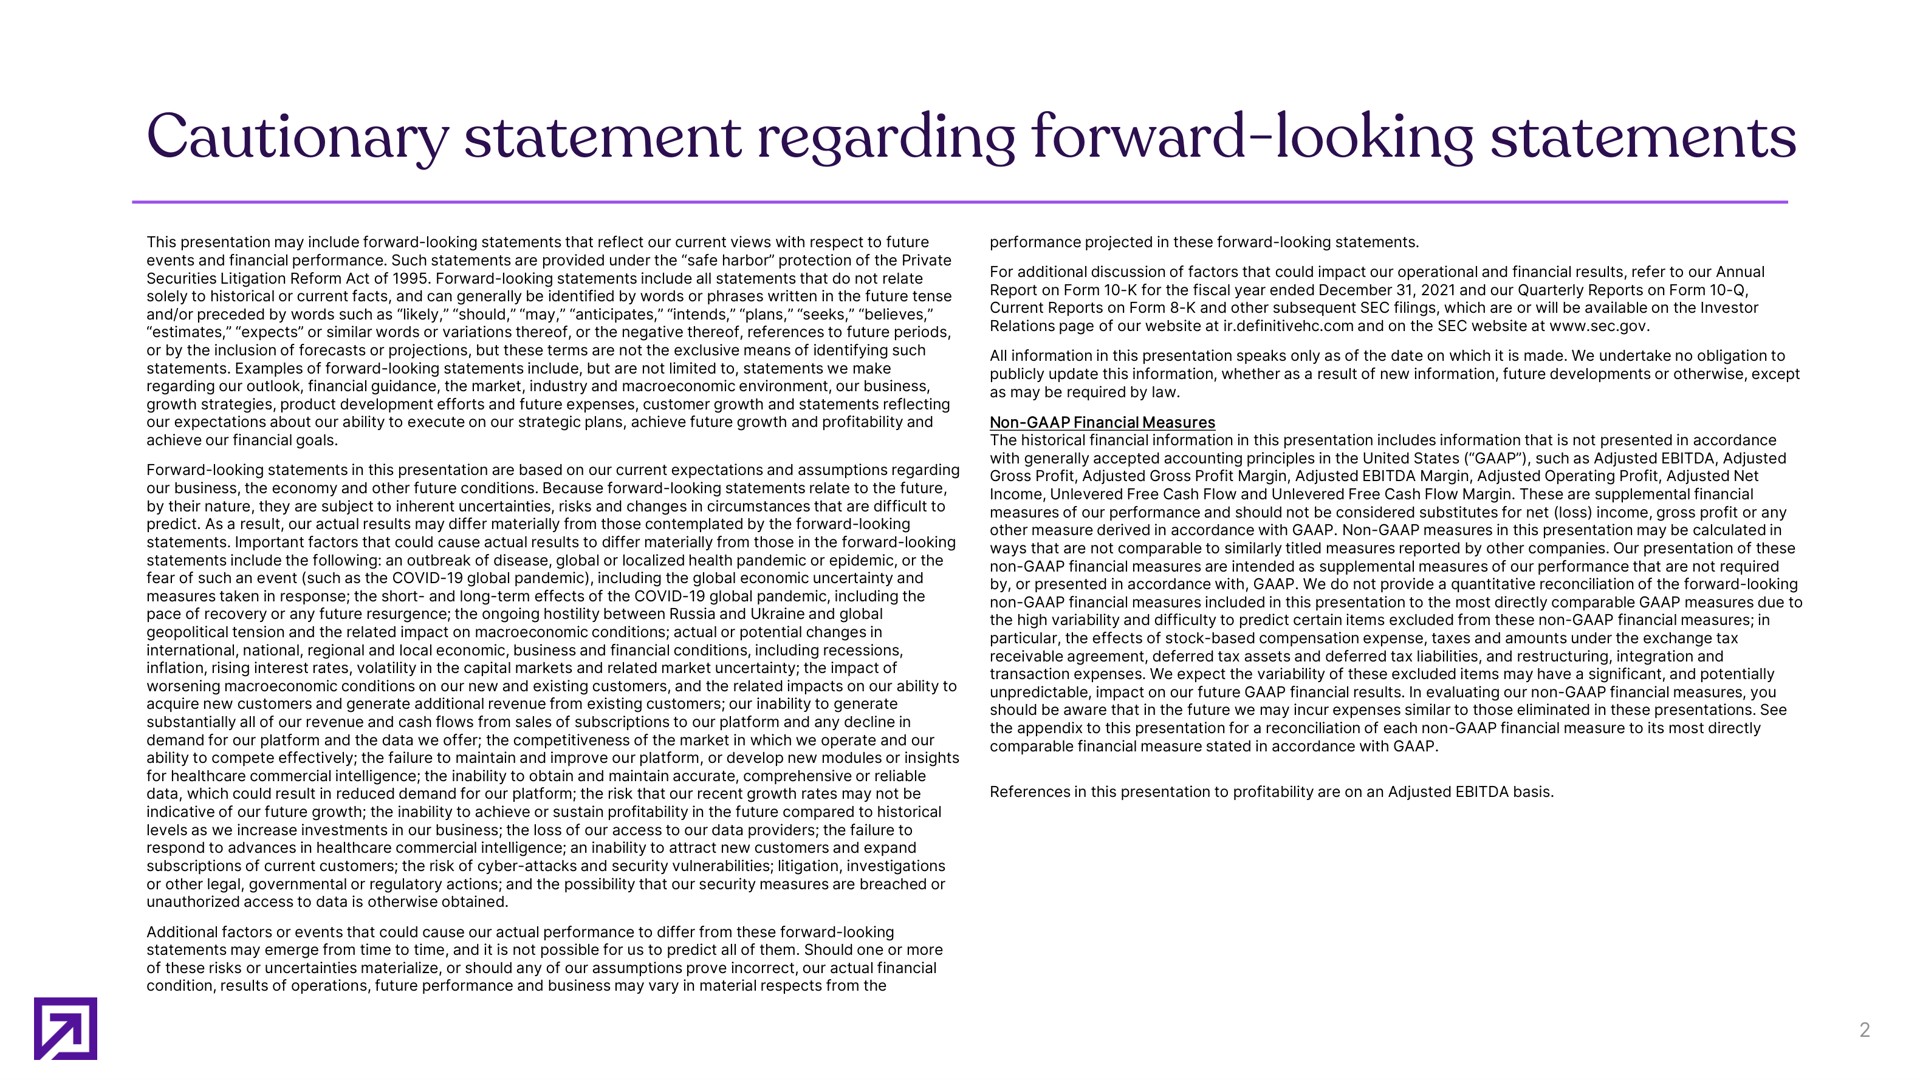 cautionary statement regarding forward looking statements | Definitive Healthcare